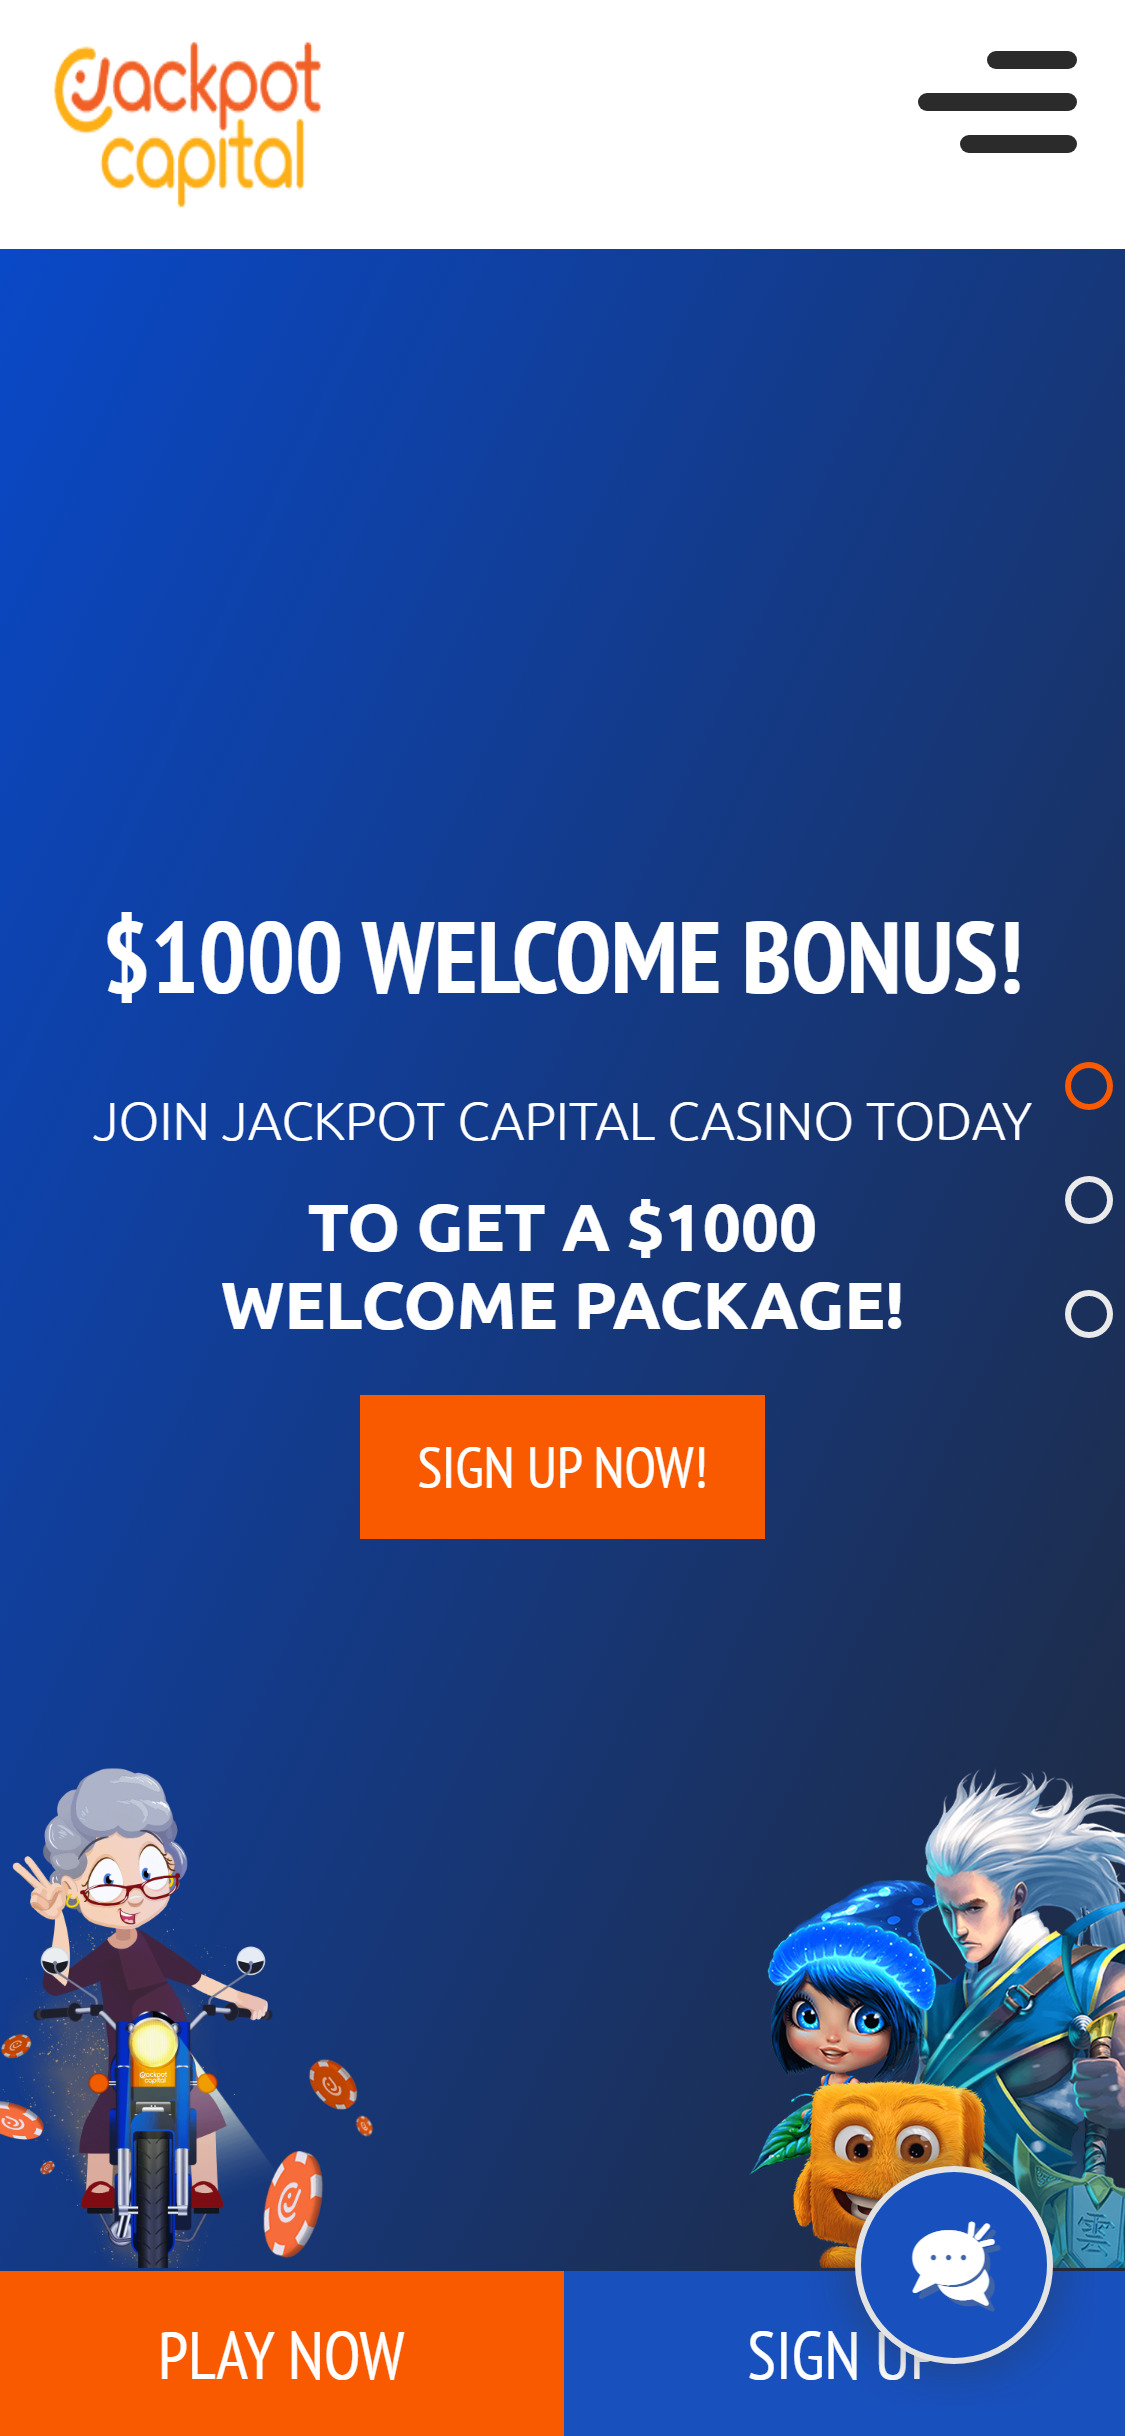 Jackpot Capital Casino Mobile Login Review